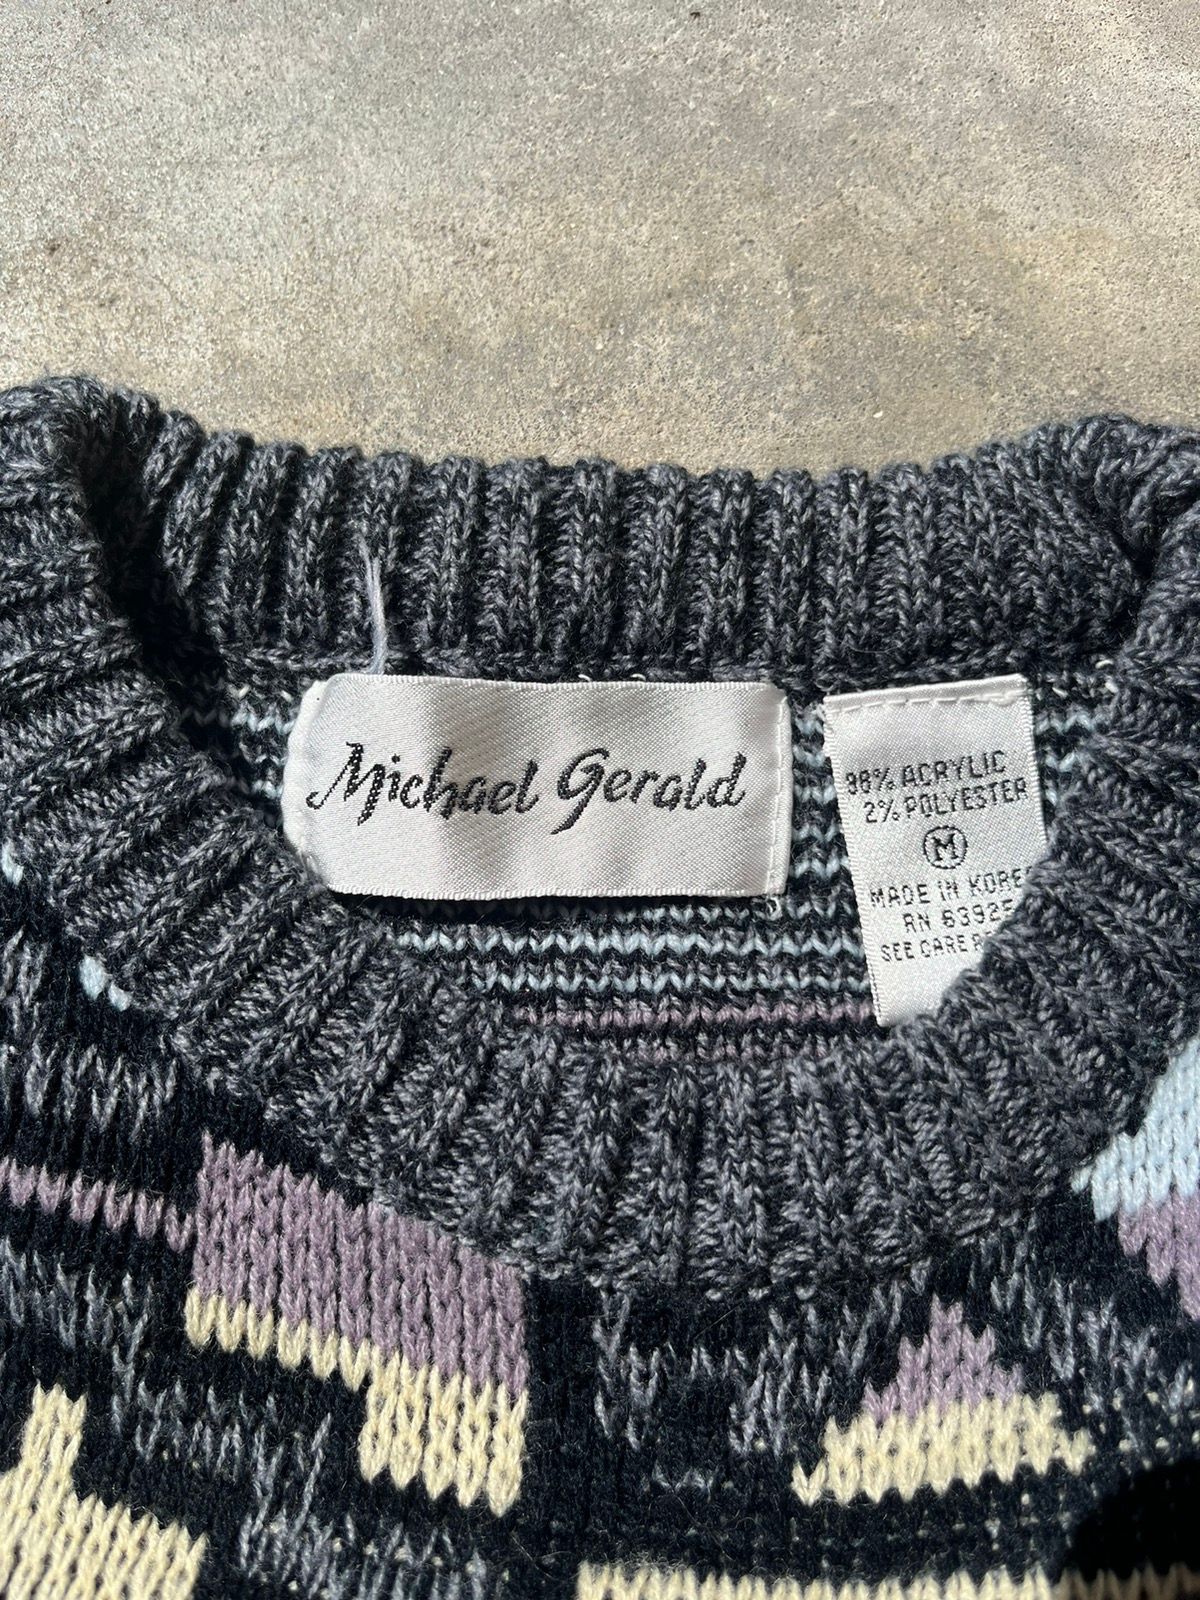 Vintage 1990s Michael Gerald Crazy Pattern Knit Sweater Size US M / EU 48-50 / 2 - 5 Preview